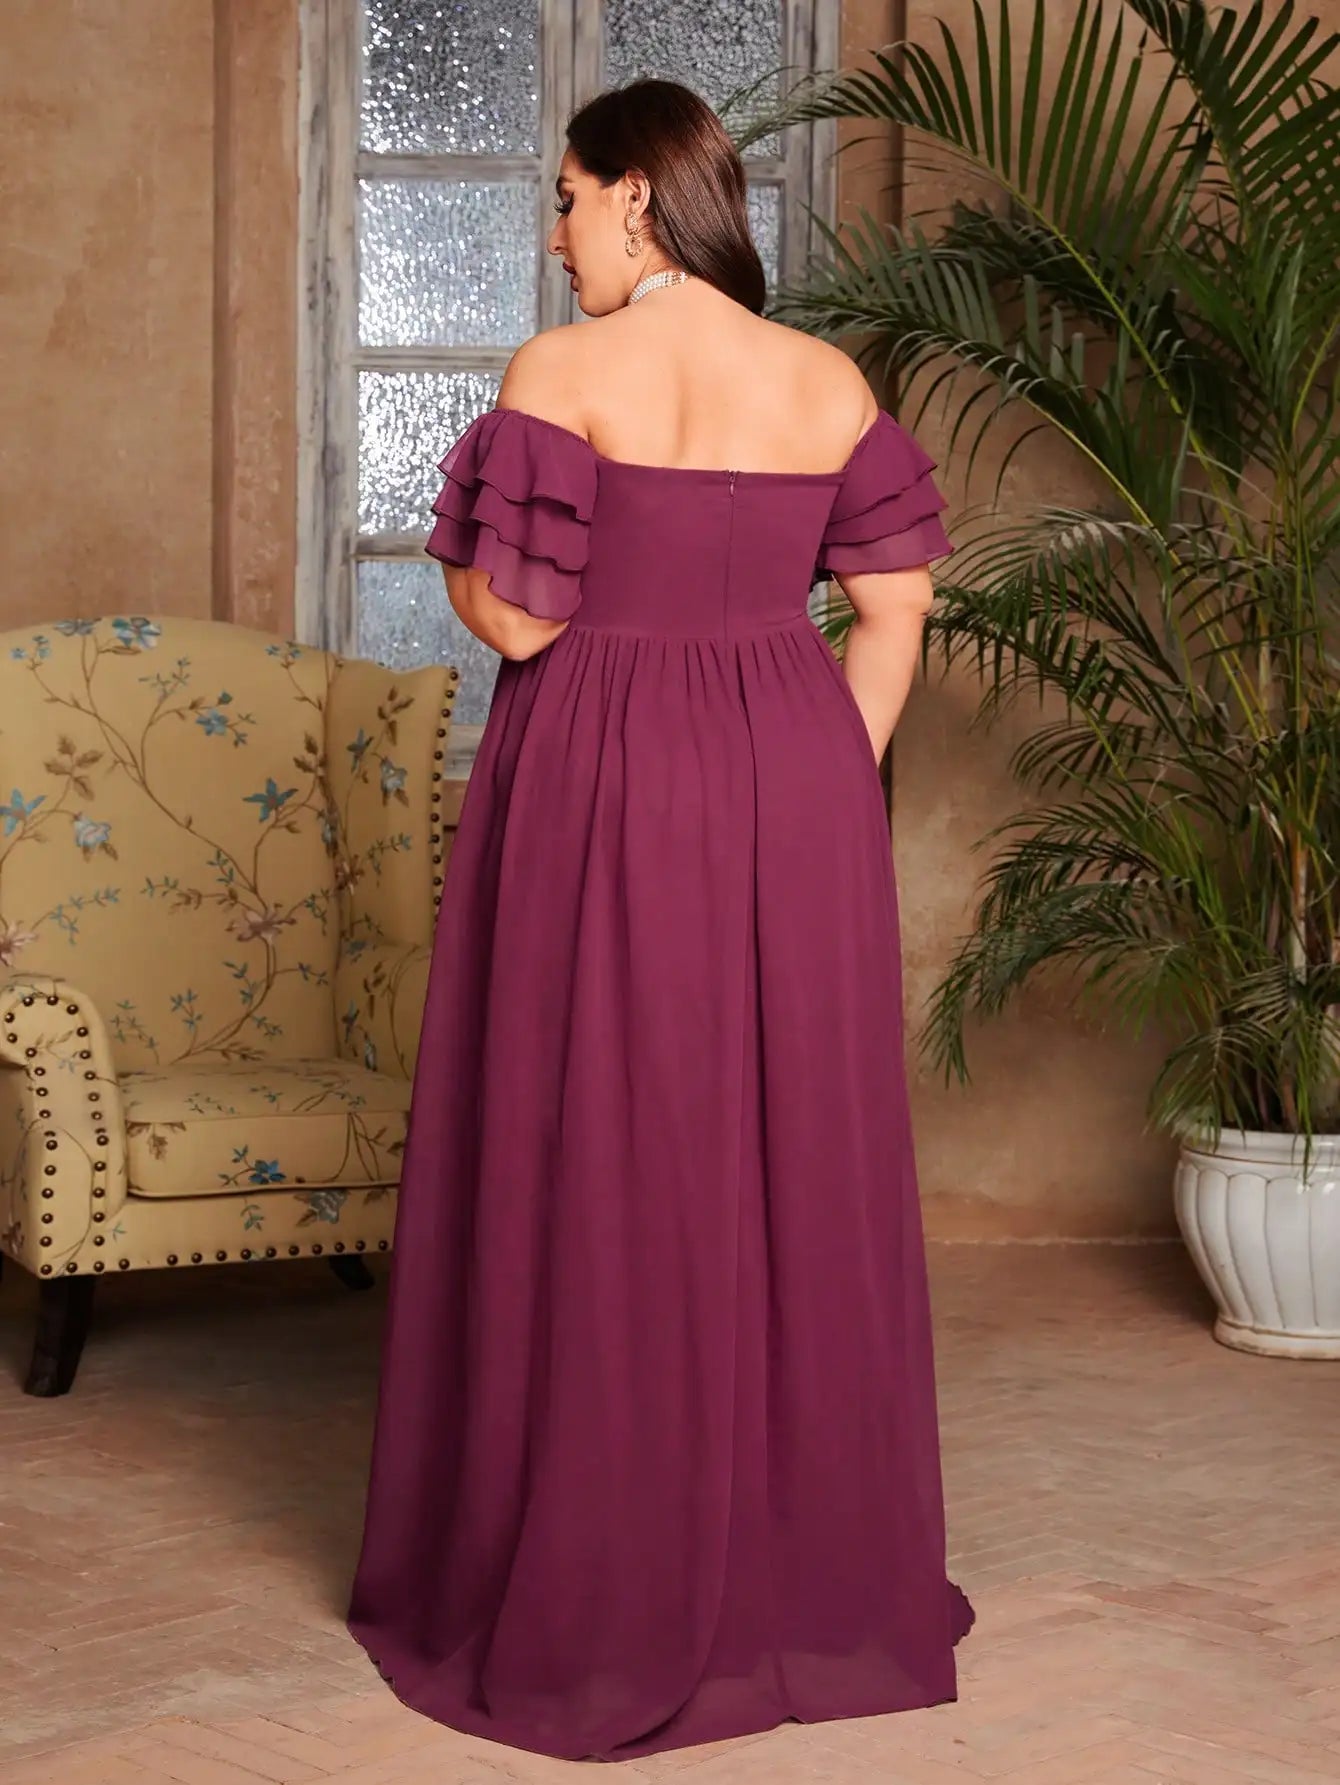 Mgiacy plus size Line neck irregular folding multi-layer lotus sleeve chiffon full skirt Evening gown ball dress Party dress